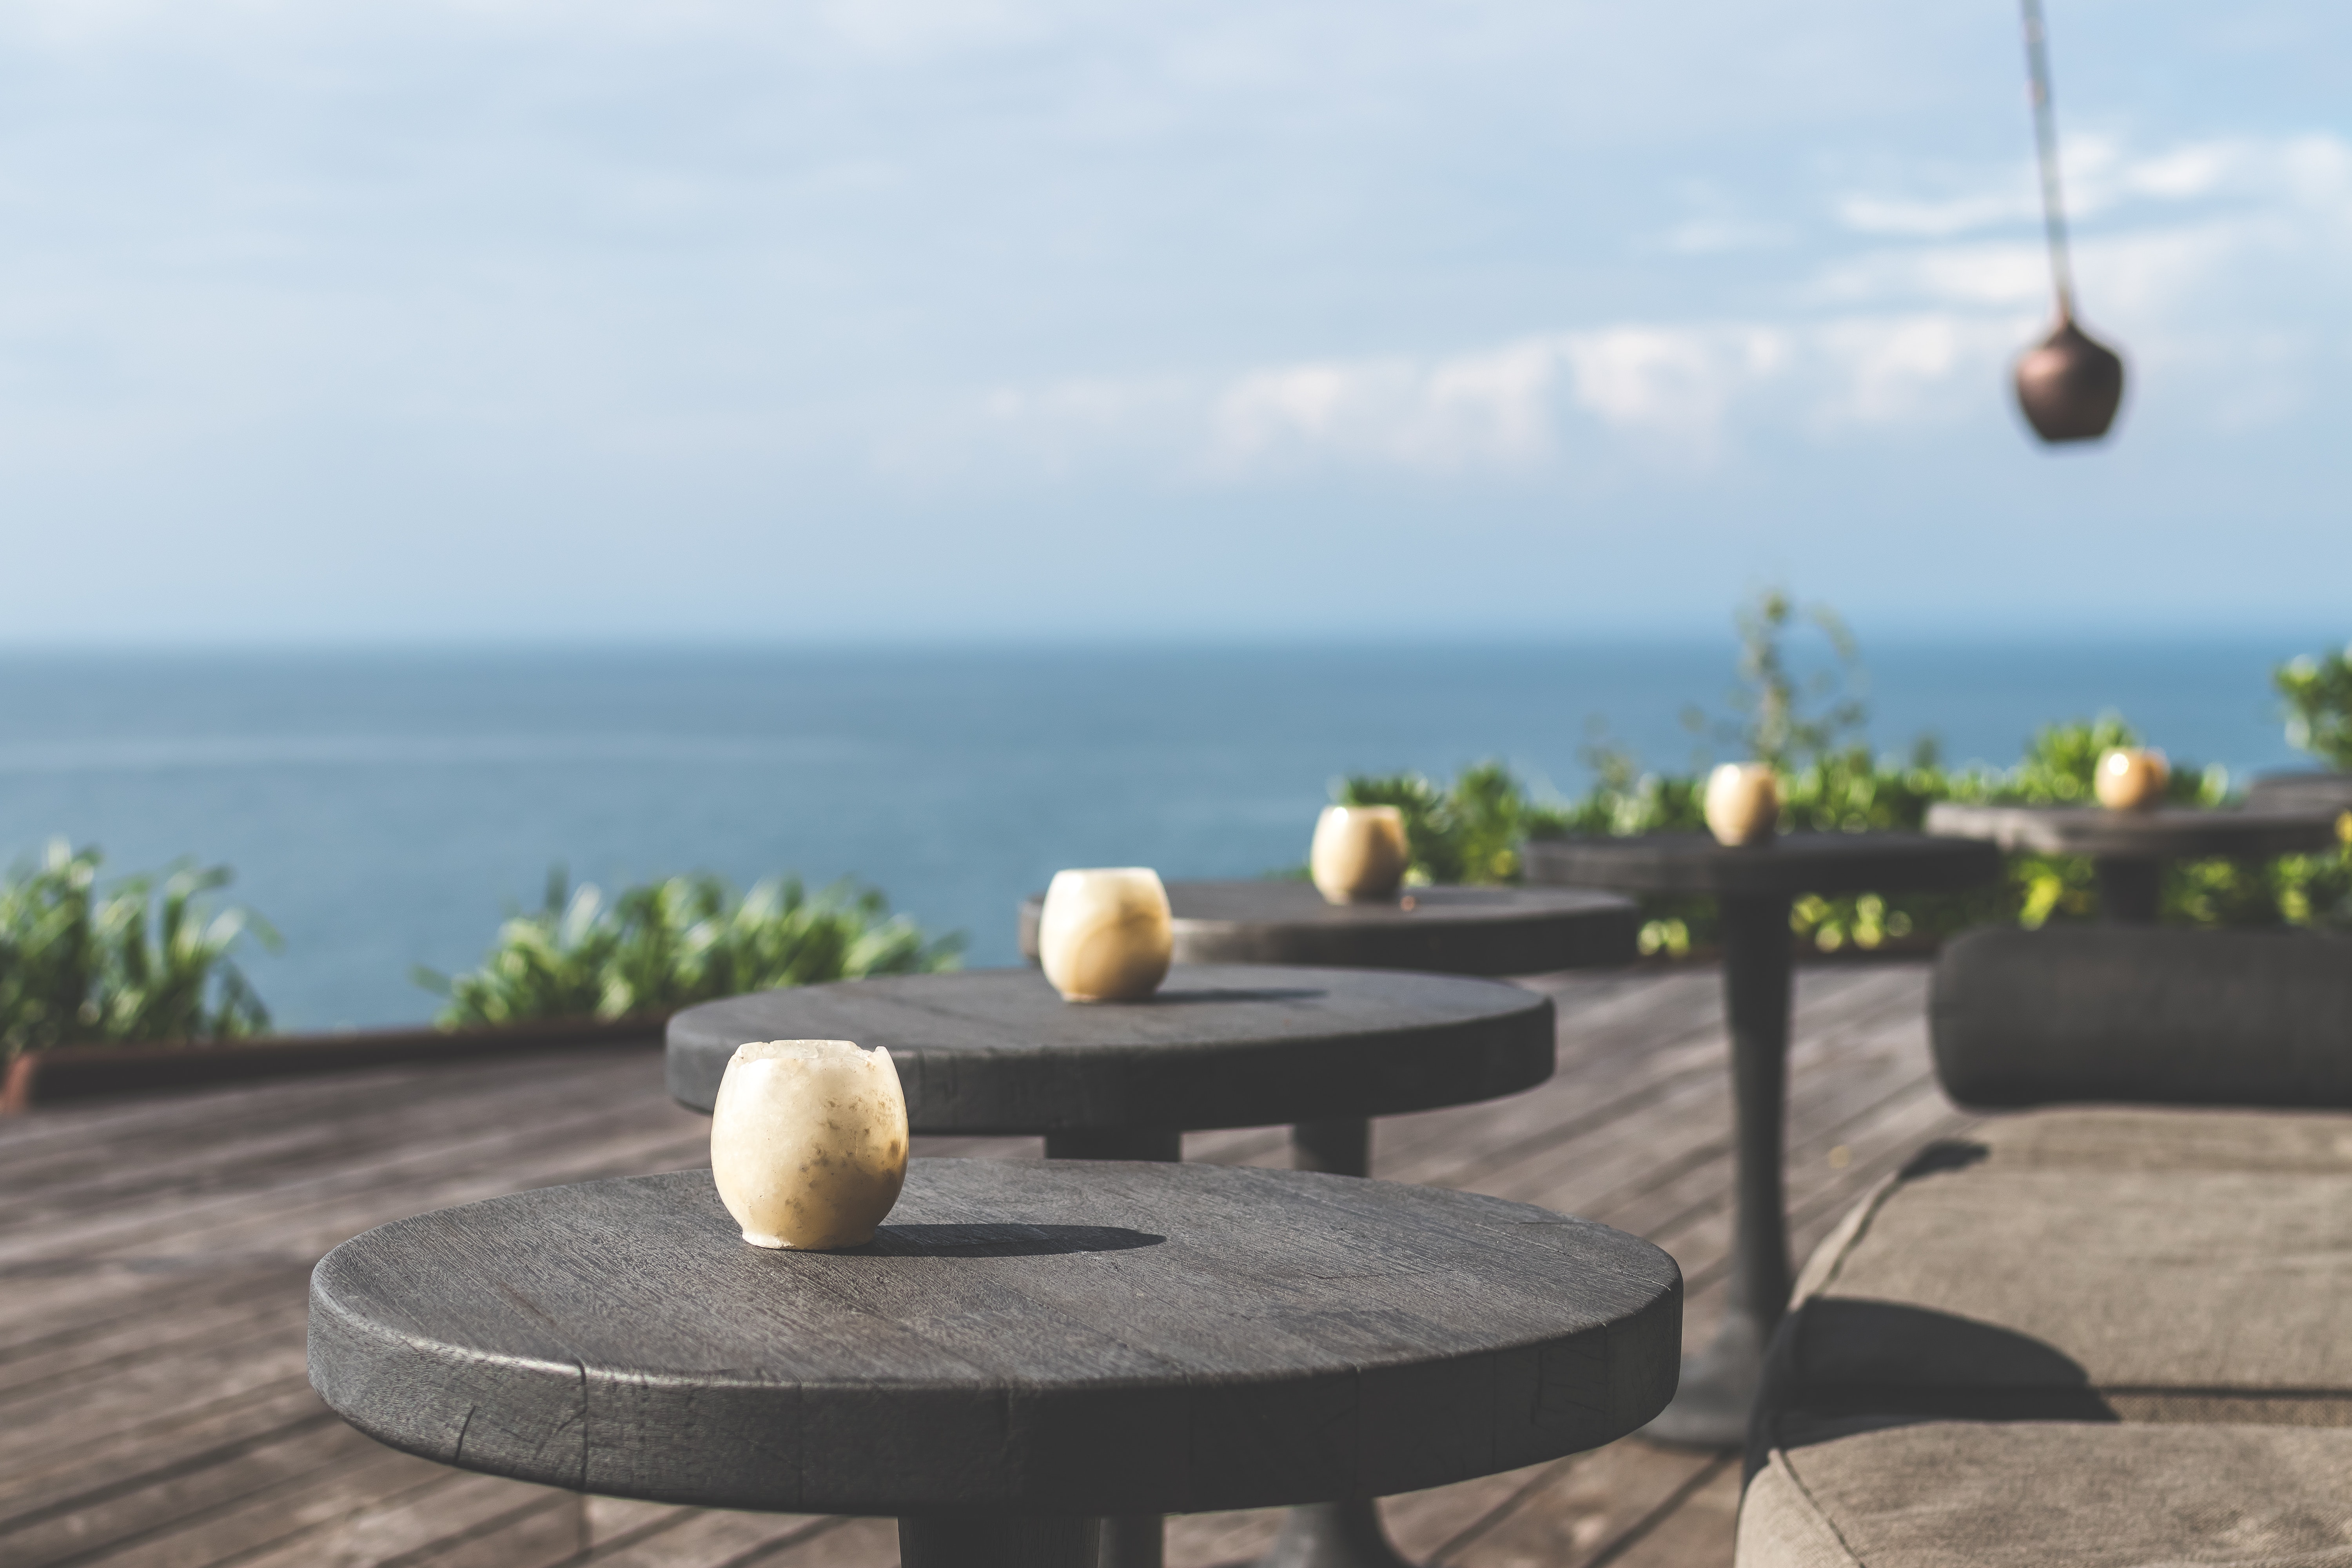 Tilt Lens Photography of Black Wooden Table, Beach, Summer, Relaxation, Resort, HQ Photo